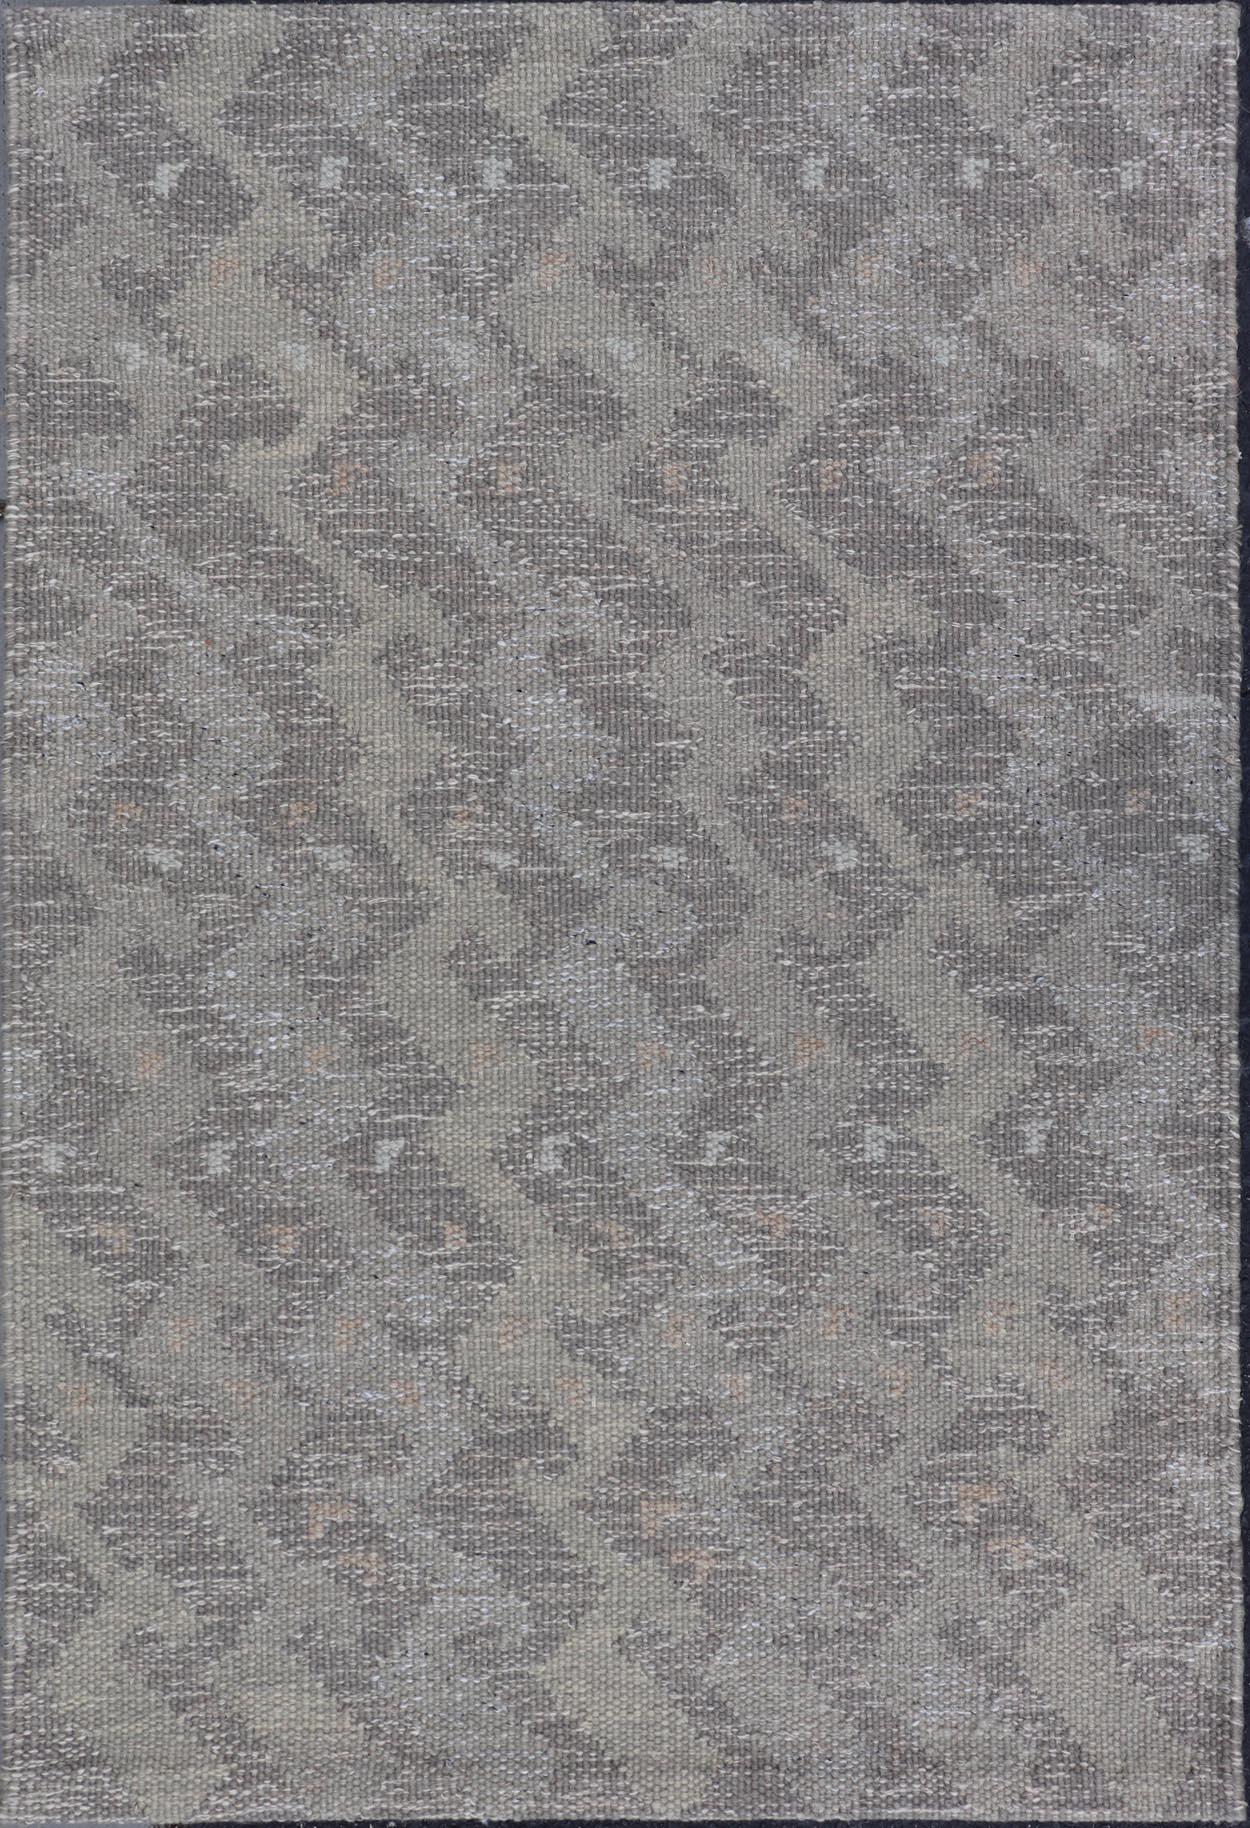 Geometric Modern Scandinavian Flat-Weave Design Rug in Gray And Light Gray Tones For Sale